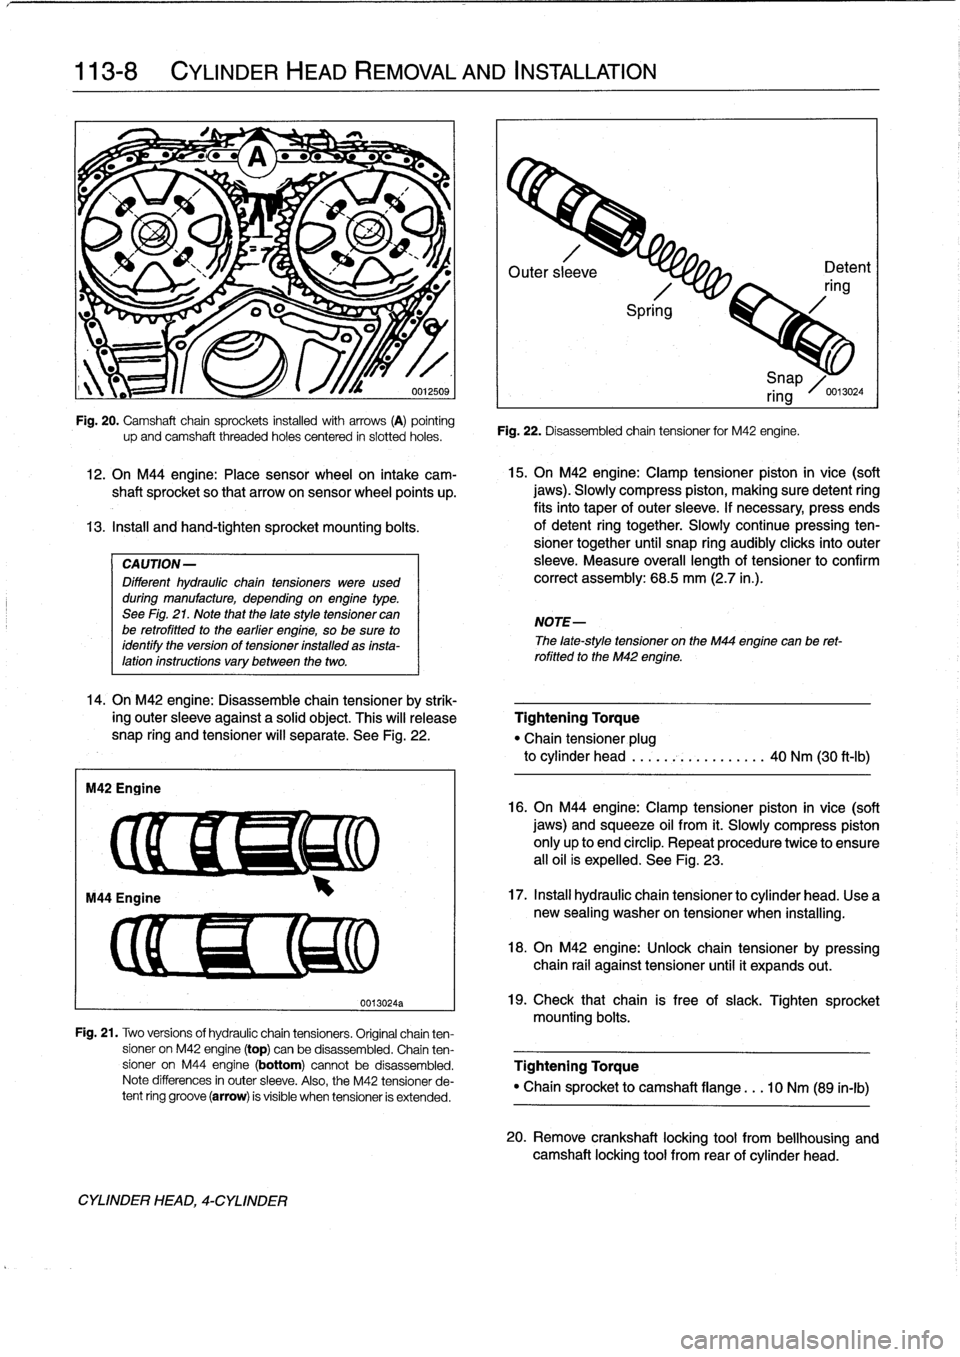 BMW 325i 1992 E36 Workshop Manual 
113-8

	

CYLINDER
HEAD
REMOVAL
AND
INSTALLATION

IW?
-
L
/~f
W

	

~
4r

"

-
"

	

;,s
1

12
.
On
M44
engine
:
Place
sensor
wheel
on
intake
cam-
shaft
sprocket
so
that
arrowon
sensor
wheel
points
